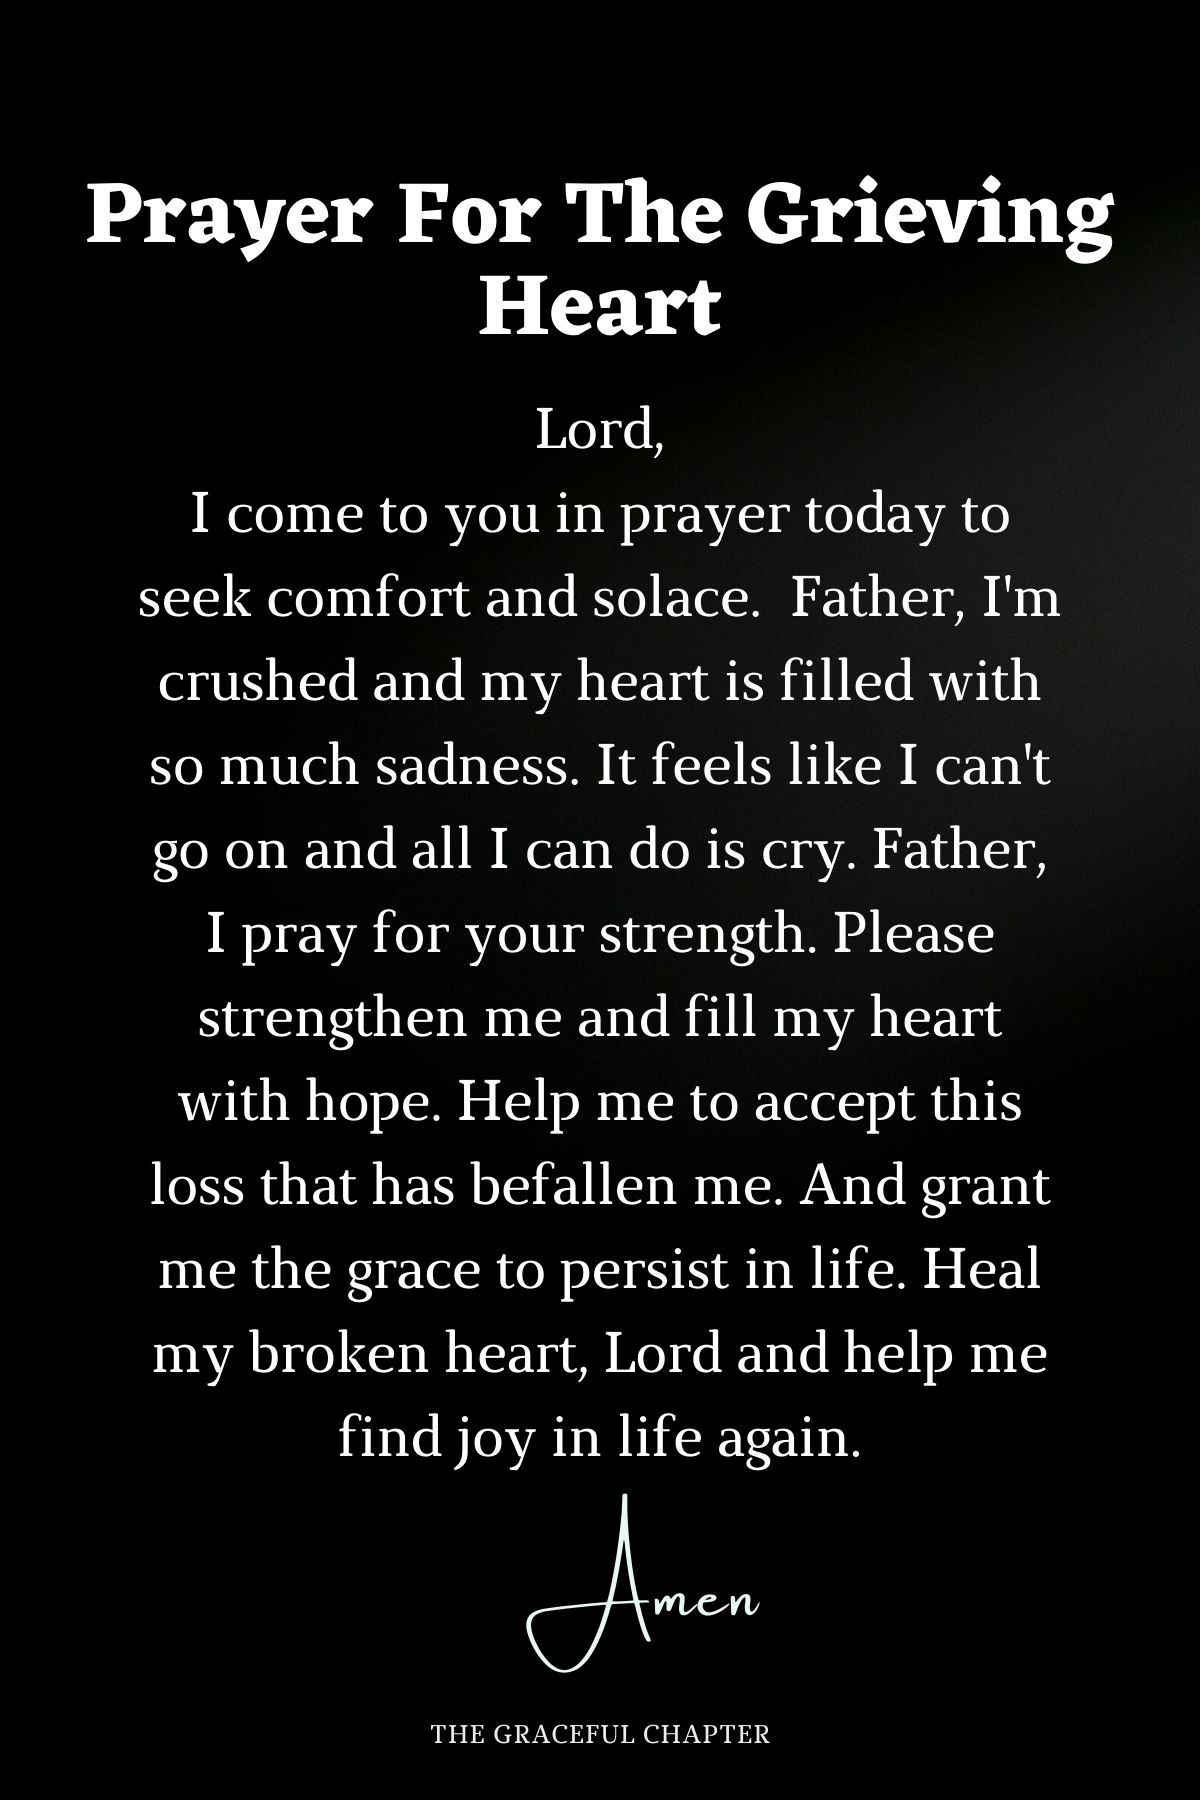 Prayer for the grieving heart